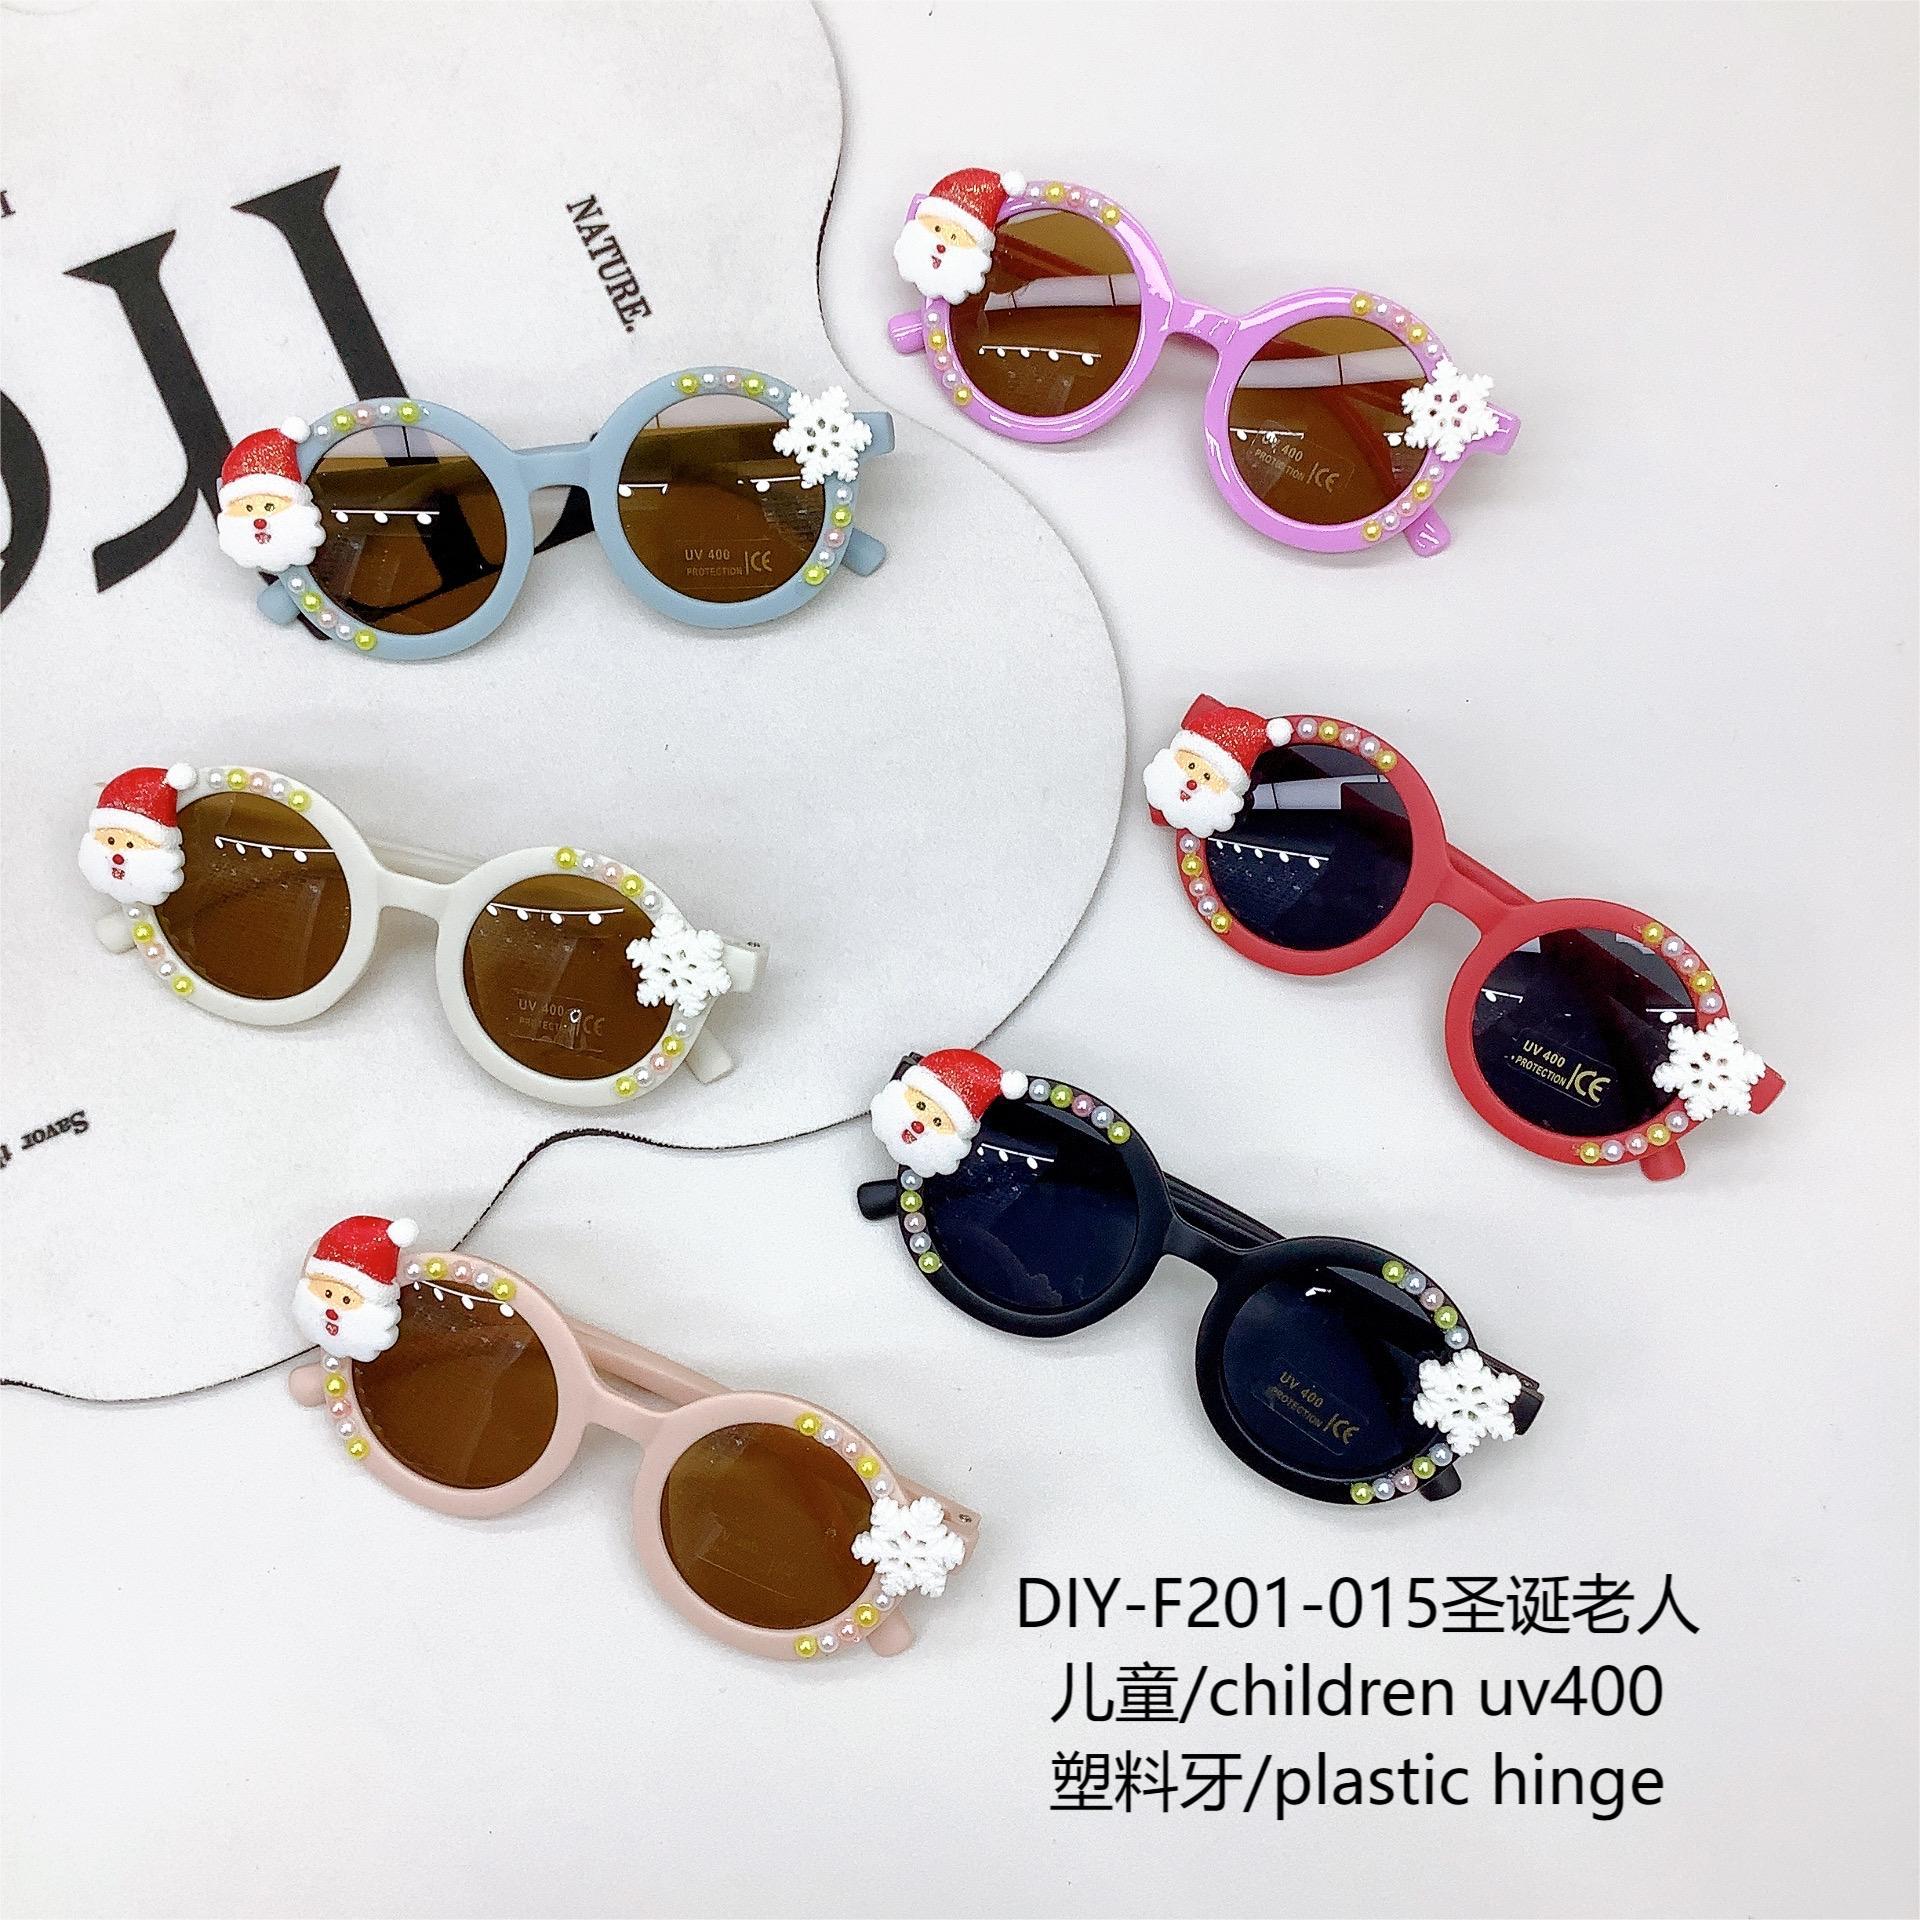 New Cute Kids Sunglasses round Frame Fashion Snowflake Santa Claus Baby Sunglasses Sunshade Stylish Glasses